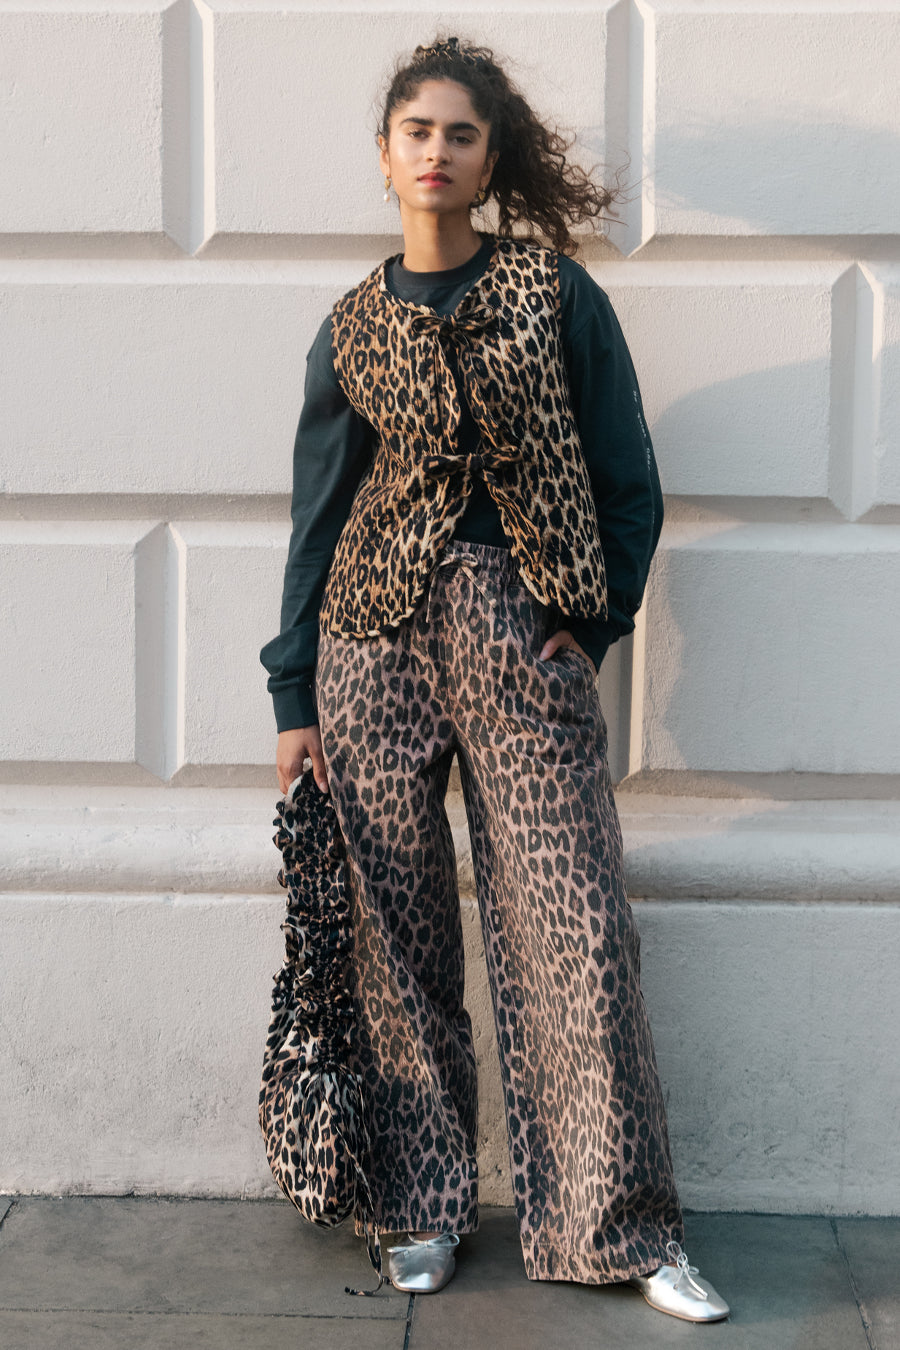 WOLFORD Josey 20 denier leopard-print tights